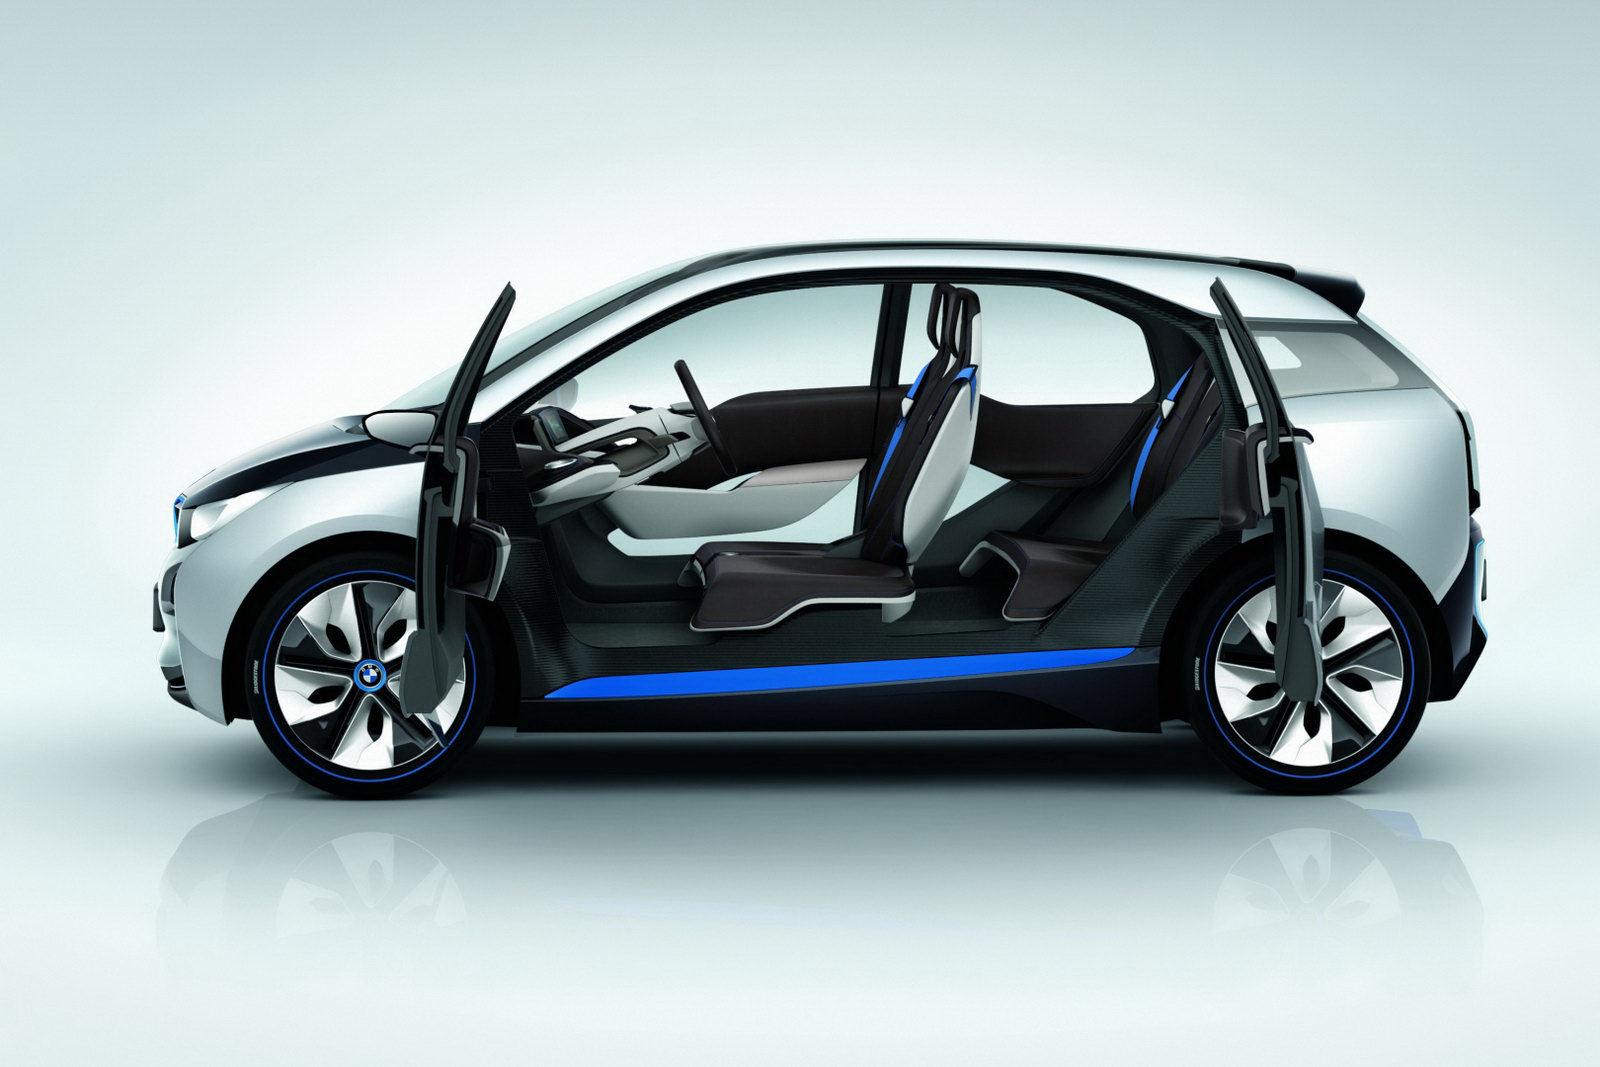 BMW I3 Concept Backgrounds, Compatible - PC, Mobile, Gadgets| 1600x1067 px